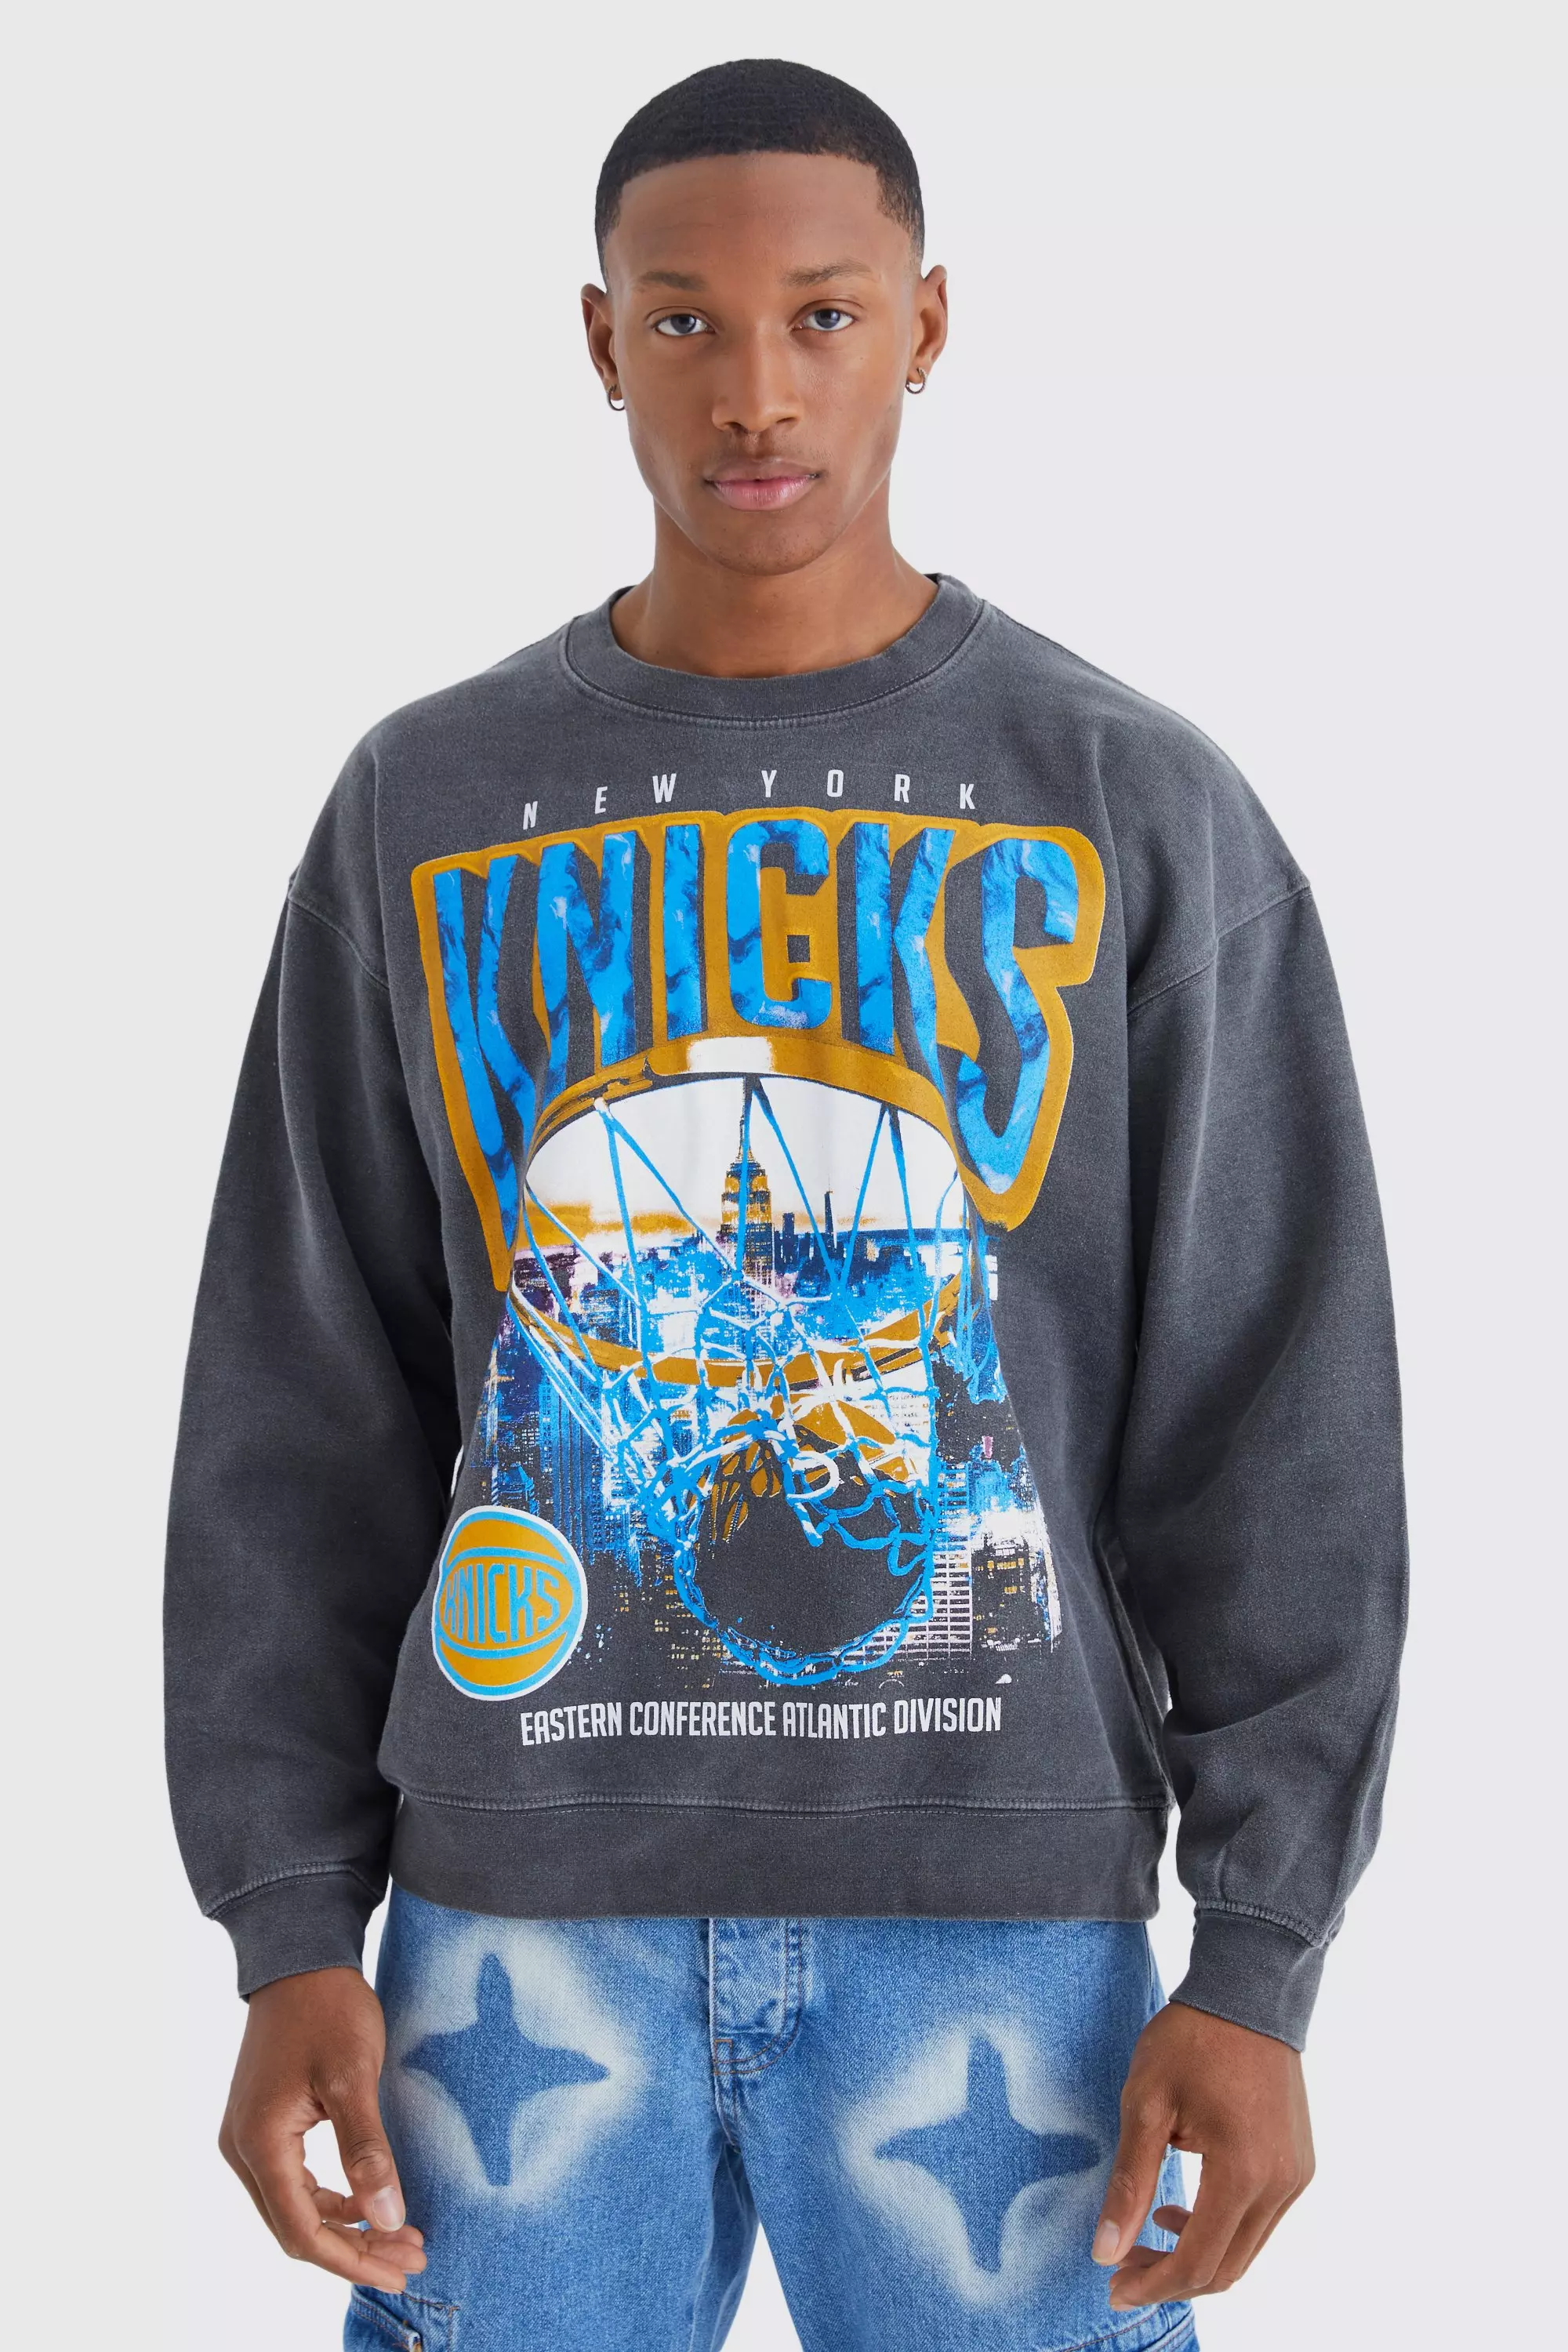 NBA Licensed Sweatshirt